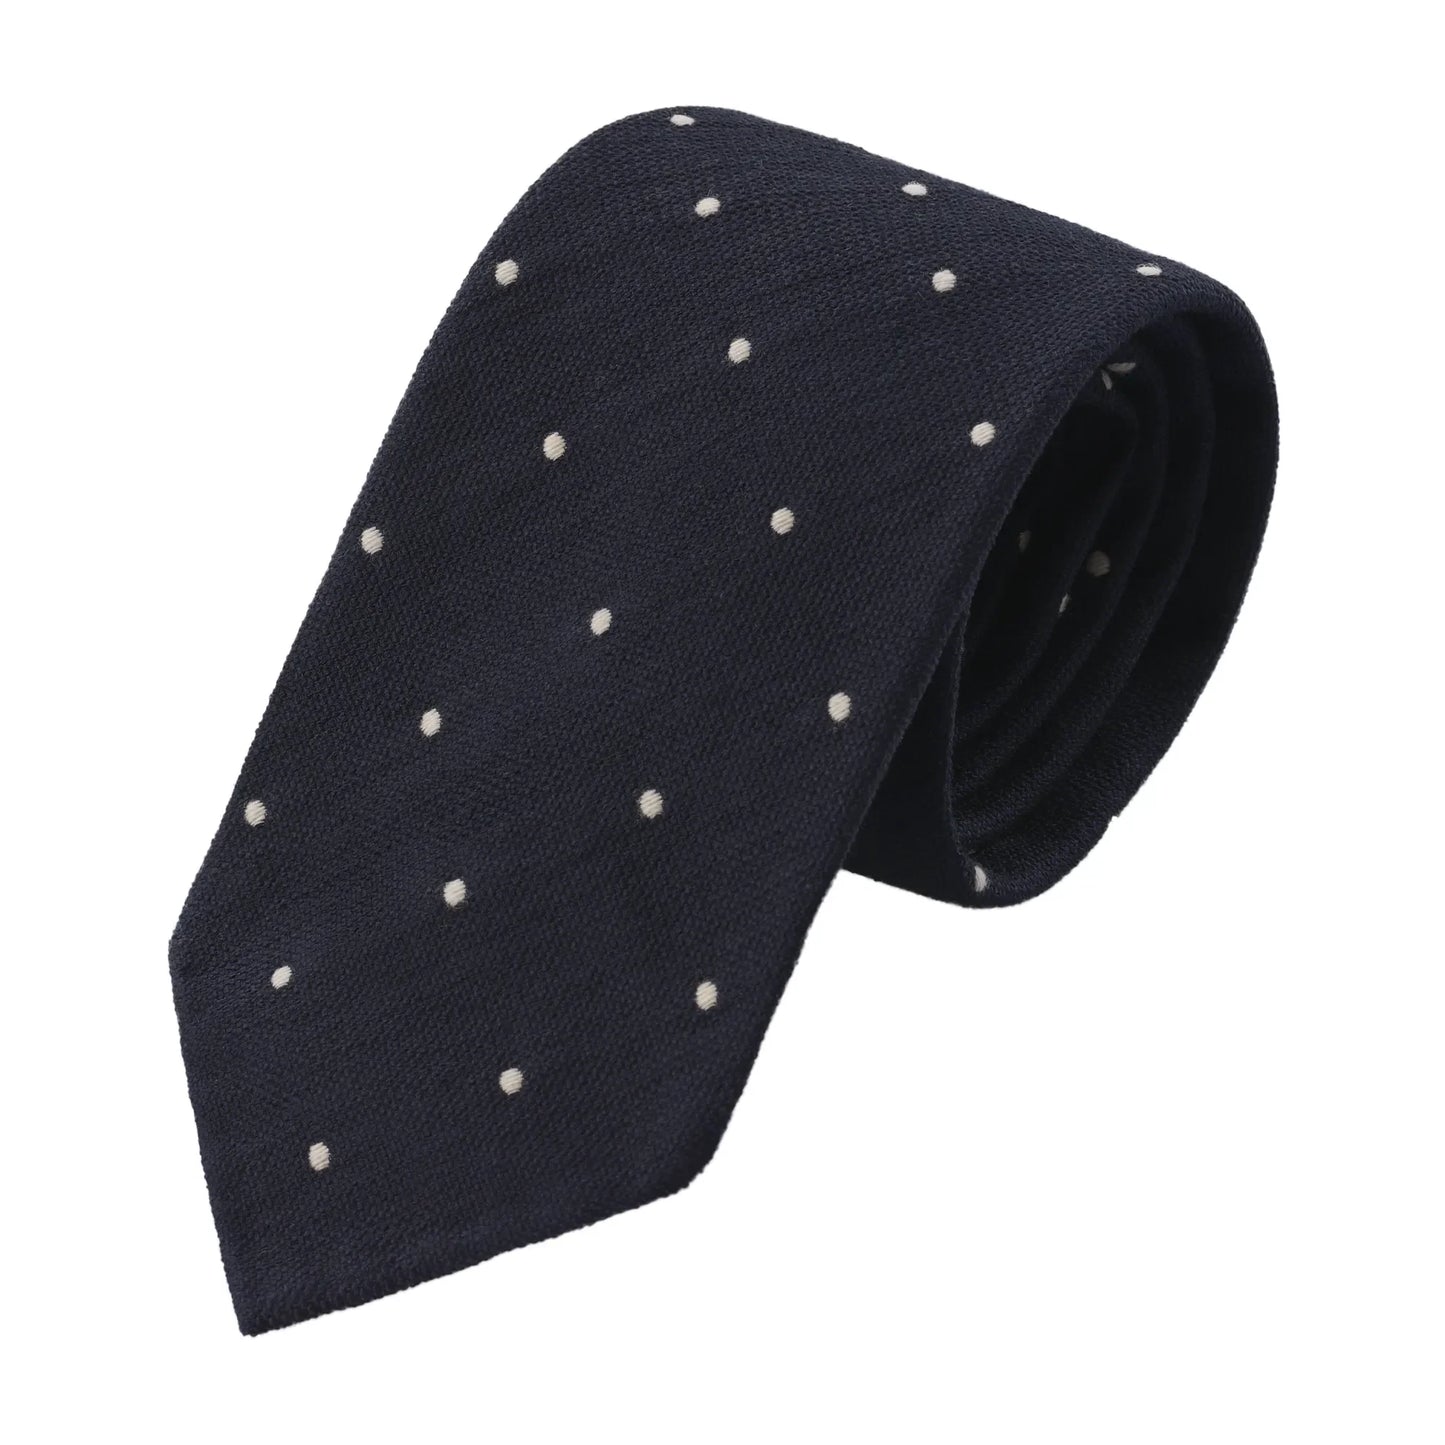 Handrolled Polka Dot Tie in Navy Blue